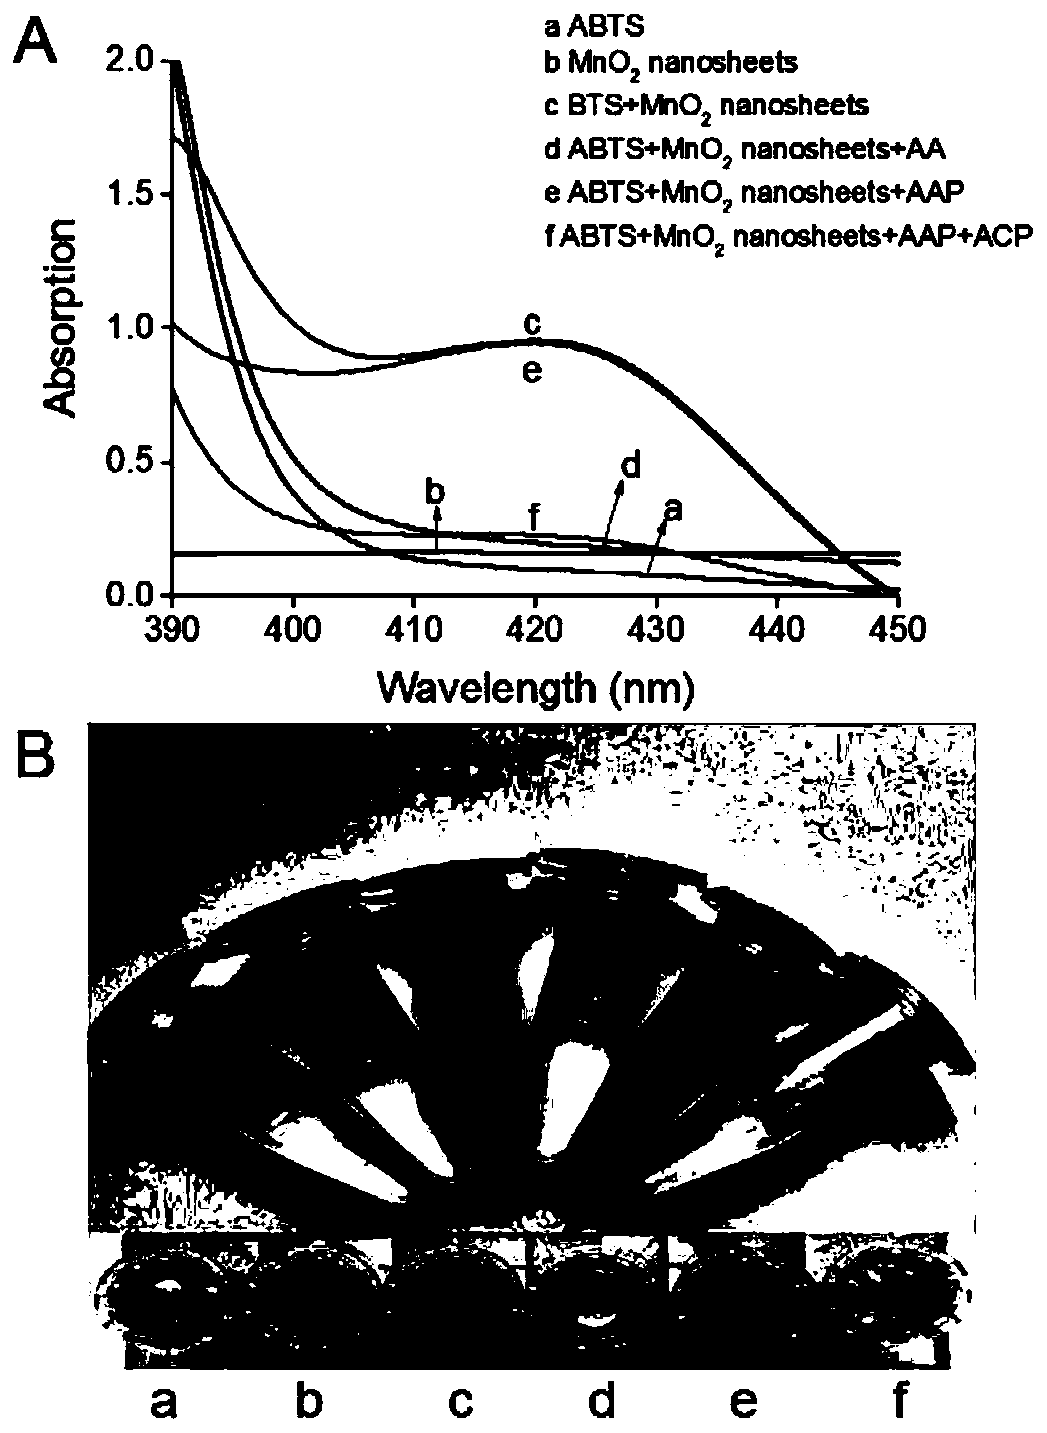 Colorimetric method for detecting acid phosphatase or organophosphorus pesticide on basis of mimic biomimetic oxidase activity of manganese dioxide